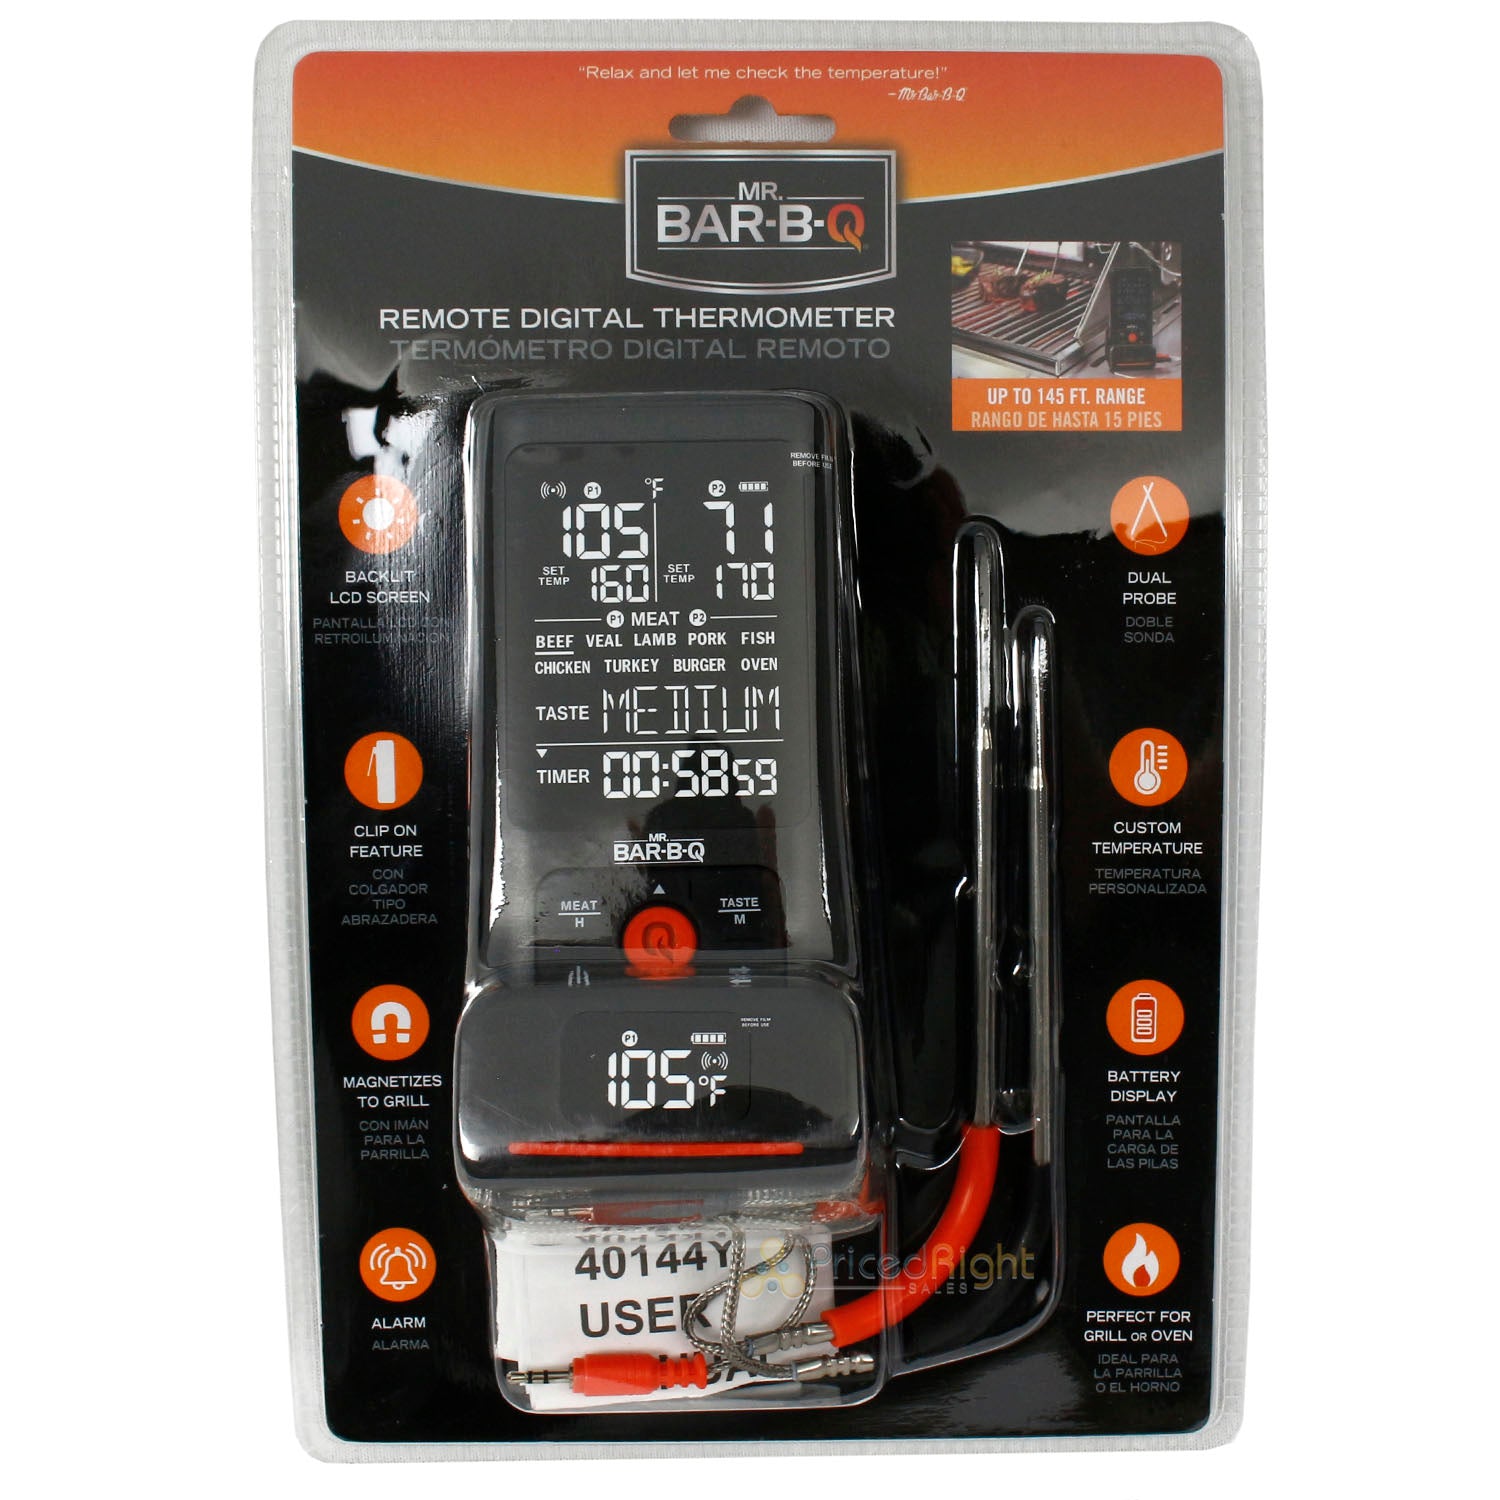 Mr Bar-B-Q Remote Wireless Digital Dual Probe Thermometer LCD Screen 145ft Range